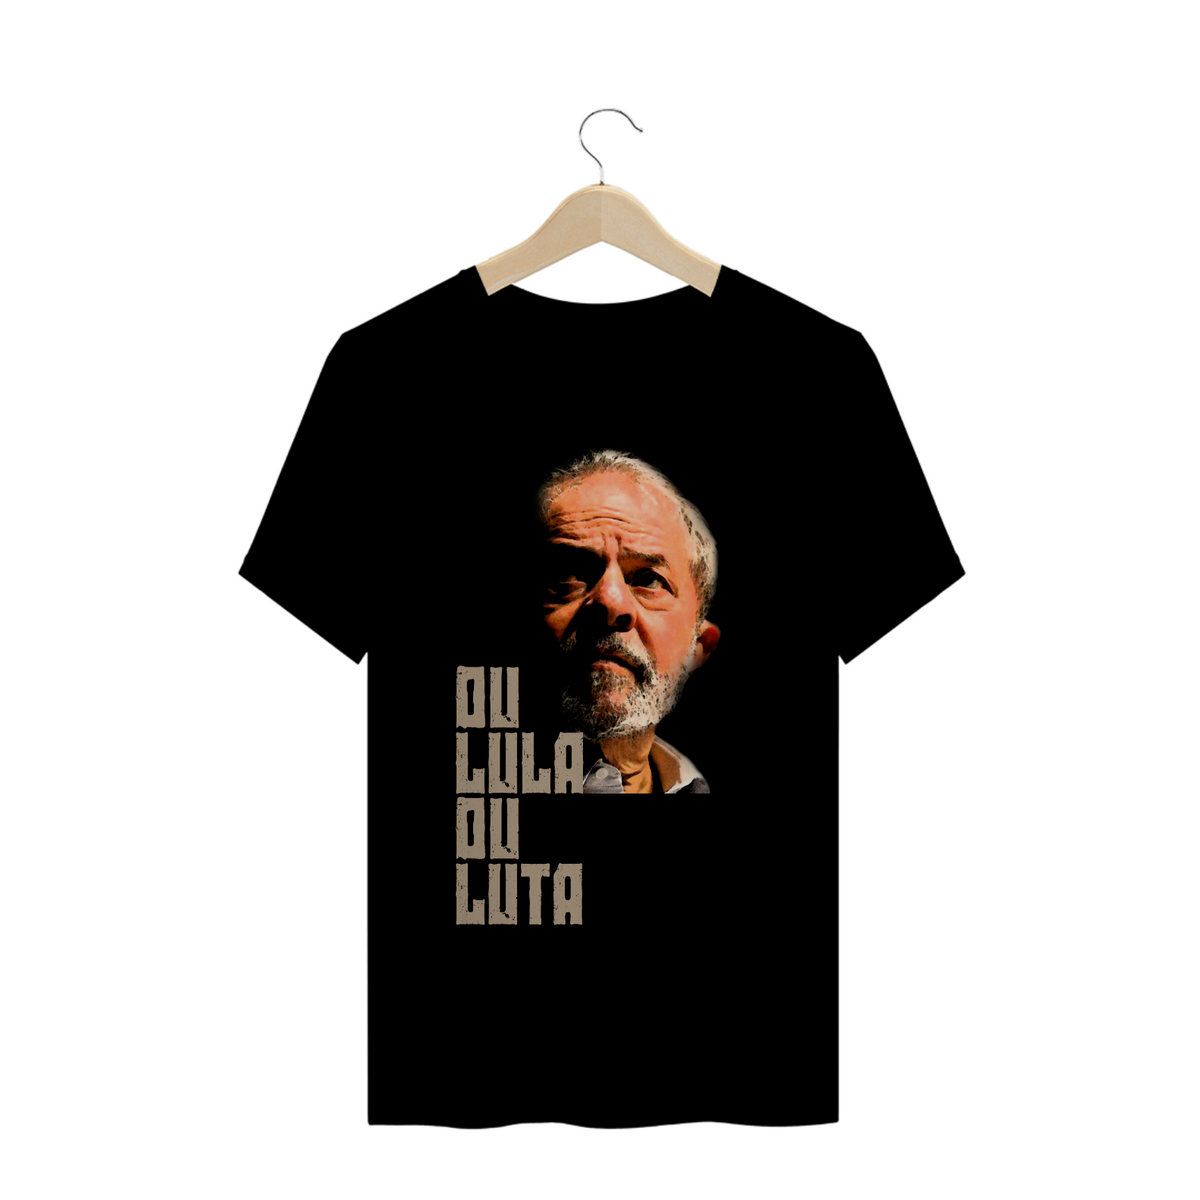 Nome do produto: Lula ou Luta